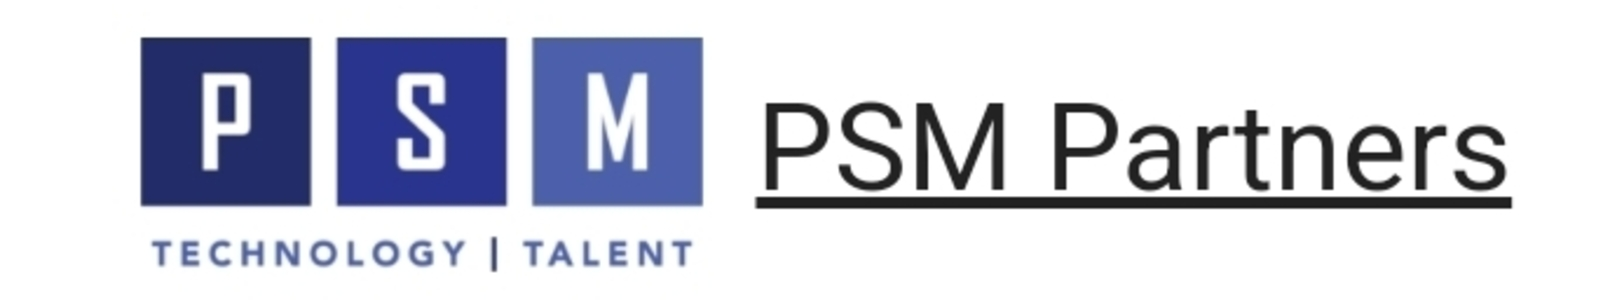 PSM Partners